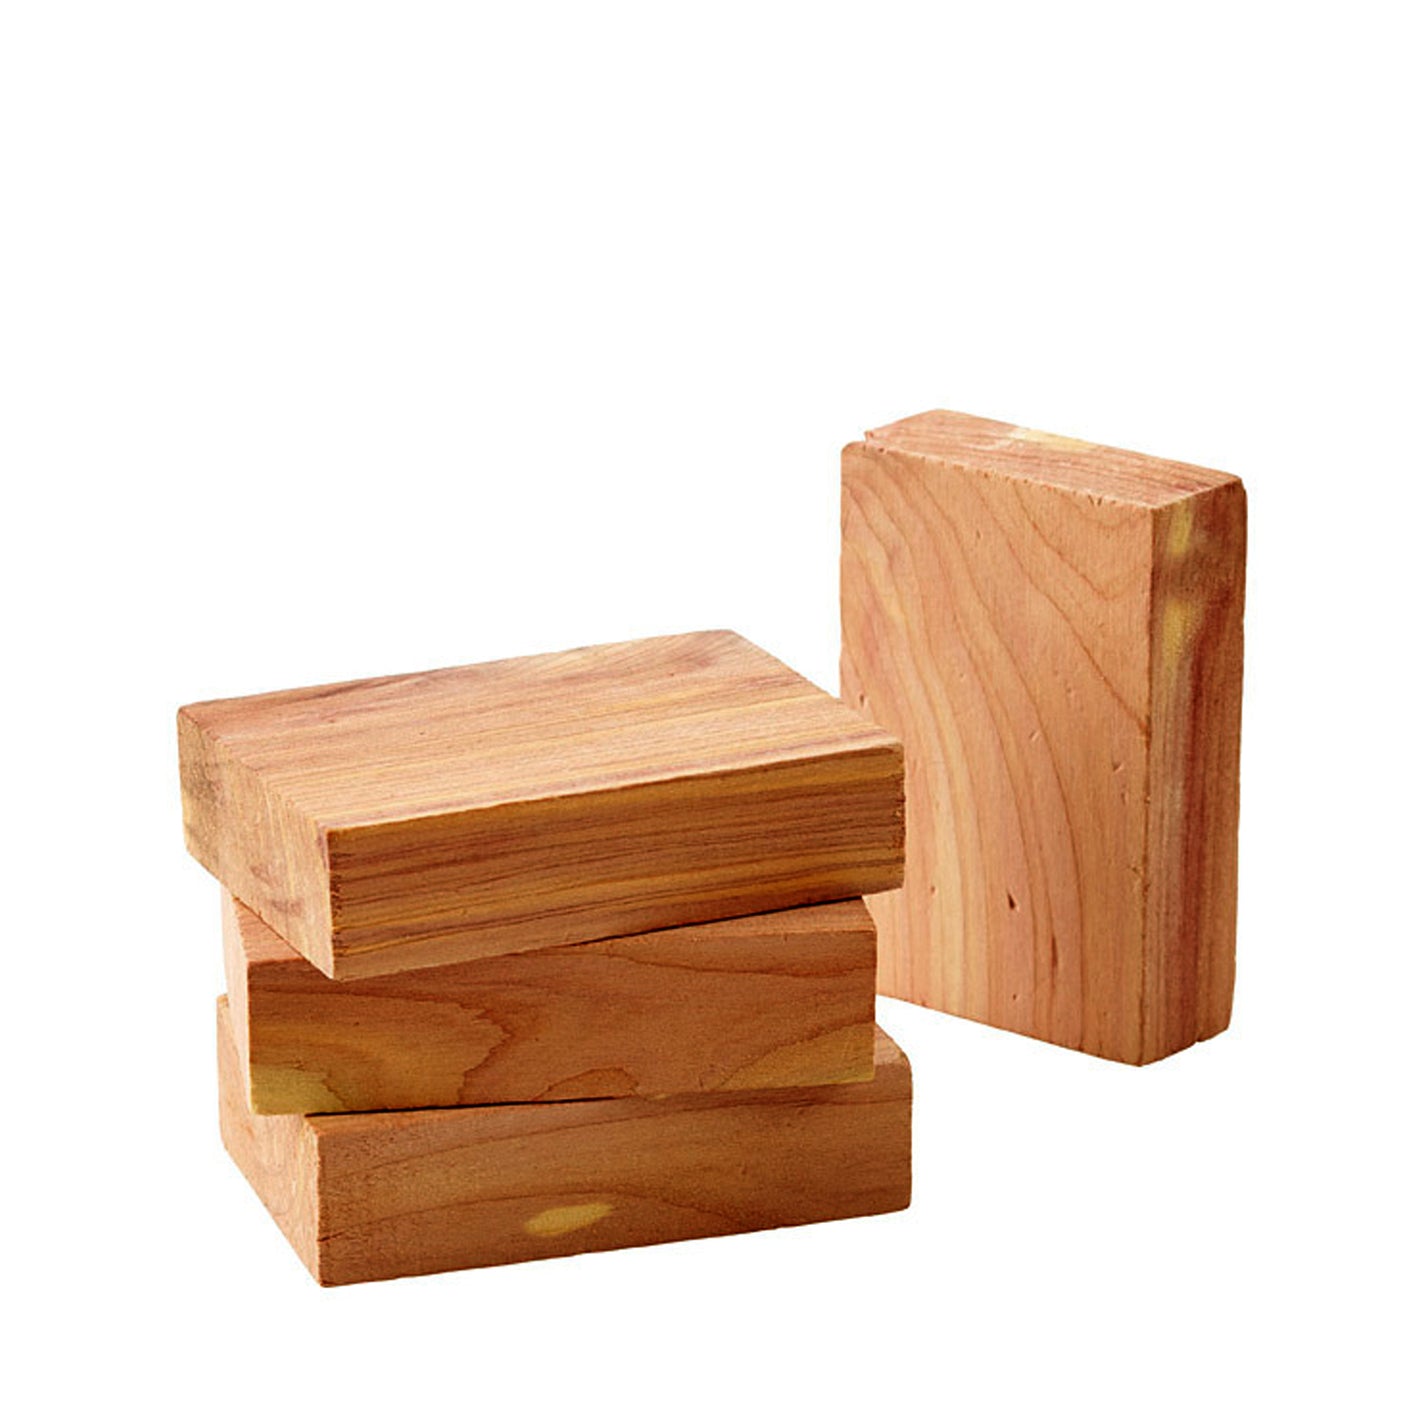 Homegrown Cedar Products Cedar Blocks 